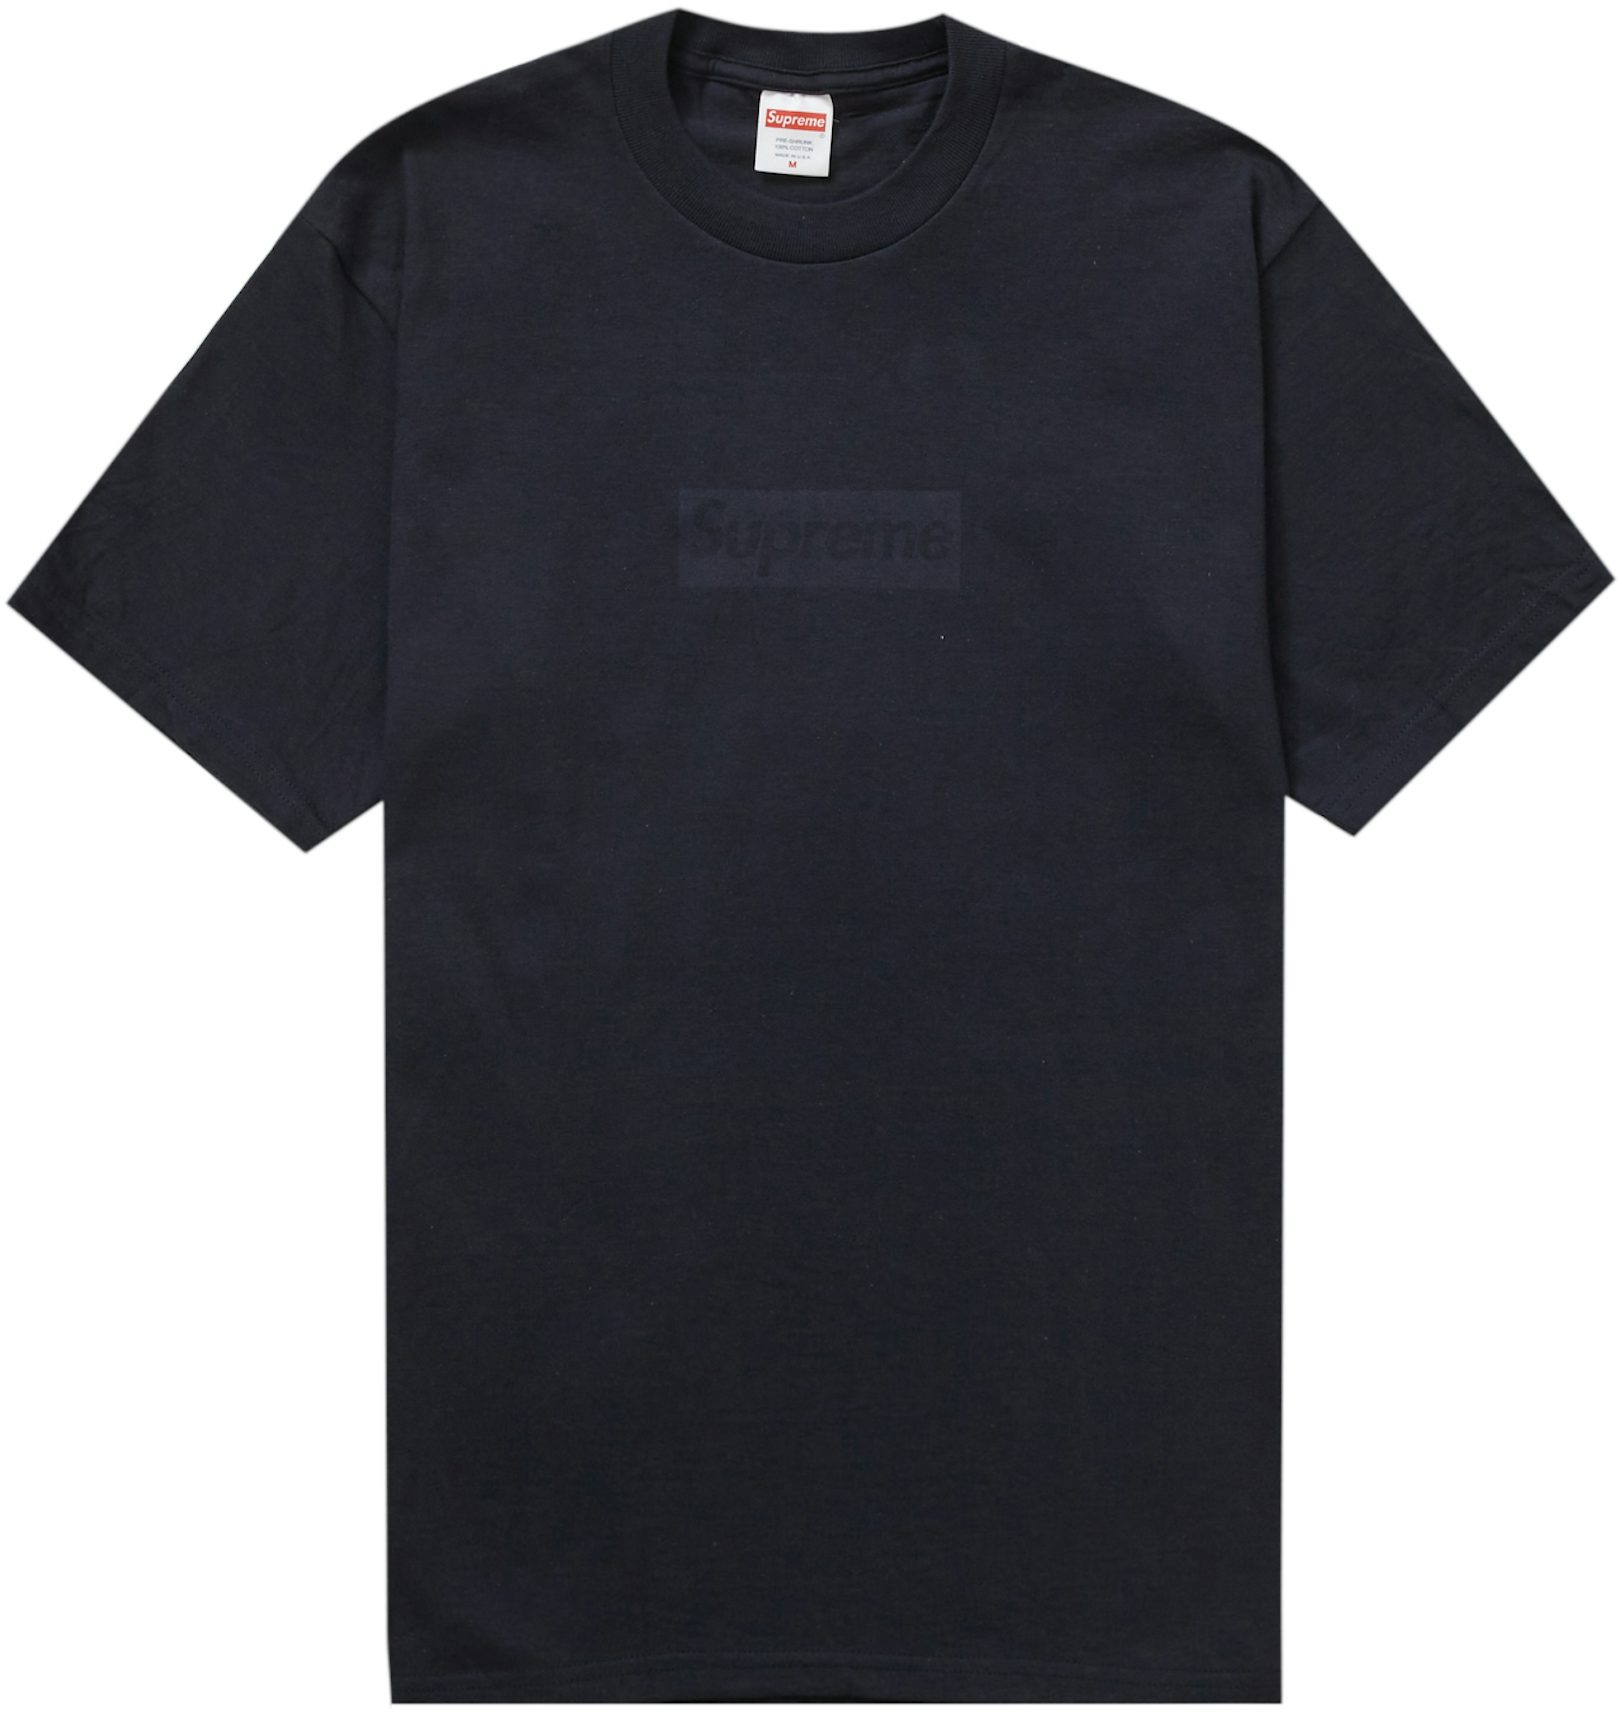 NWT** FW17 Supreme Brooklyn Box Logo Tee Shirt - Size Medium